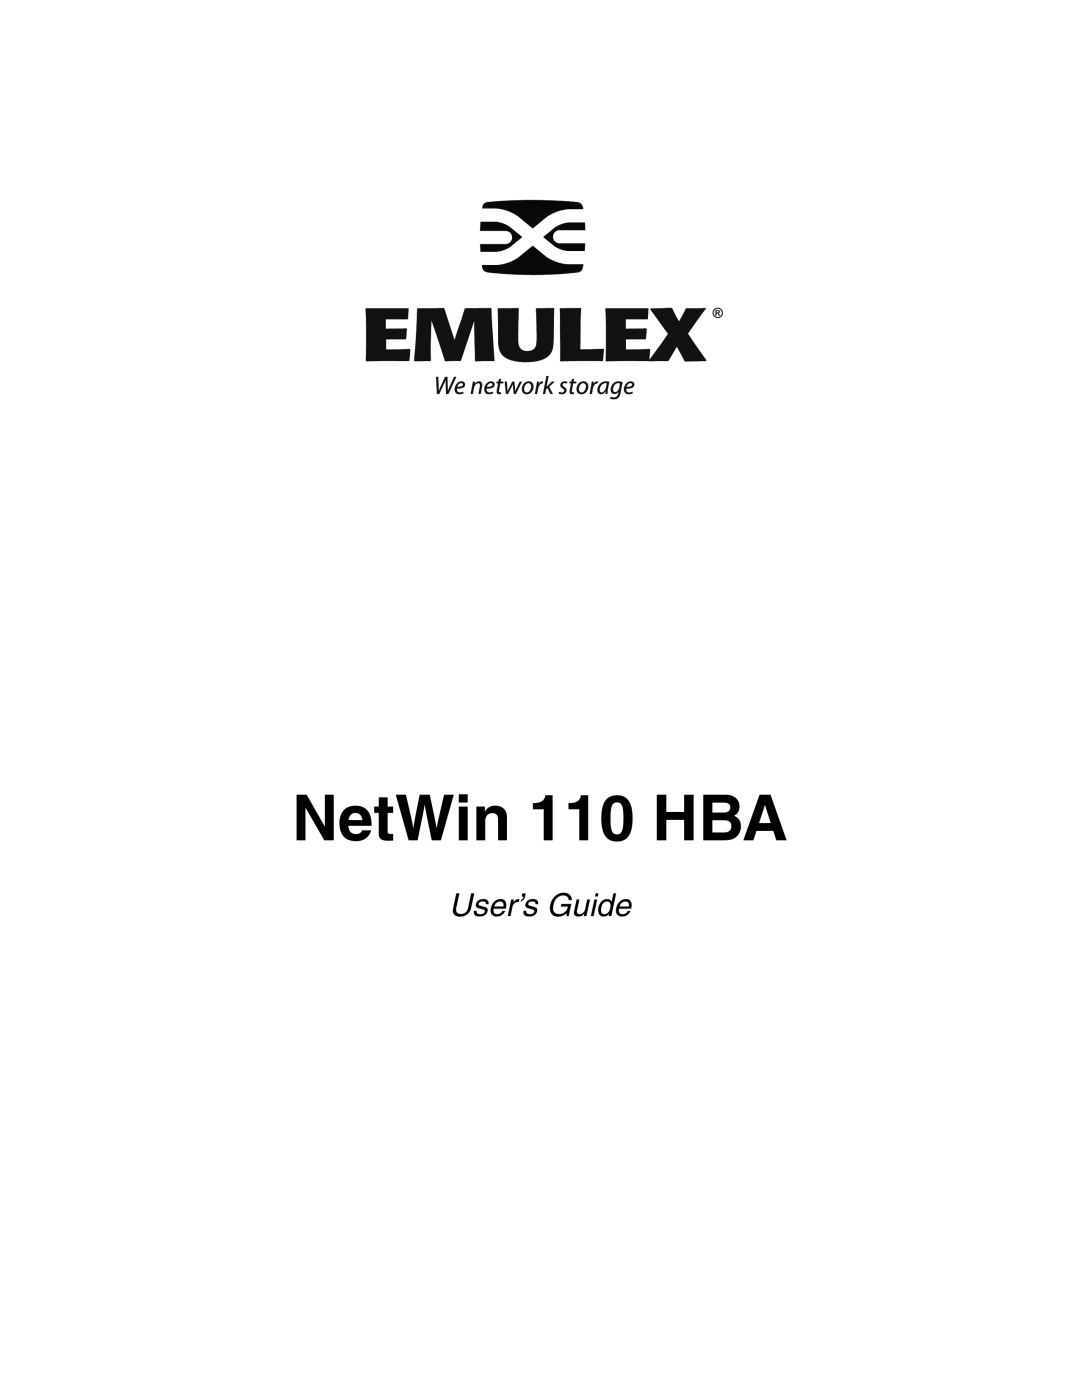 Emulex manual NetWin 110 HBA, User’s Guide 